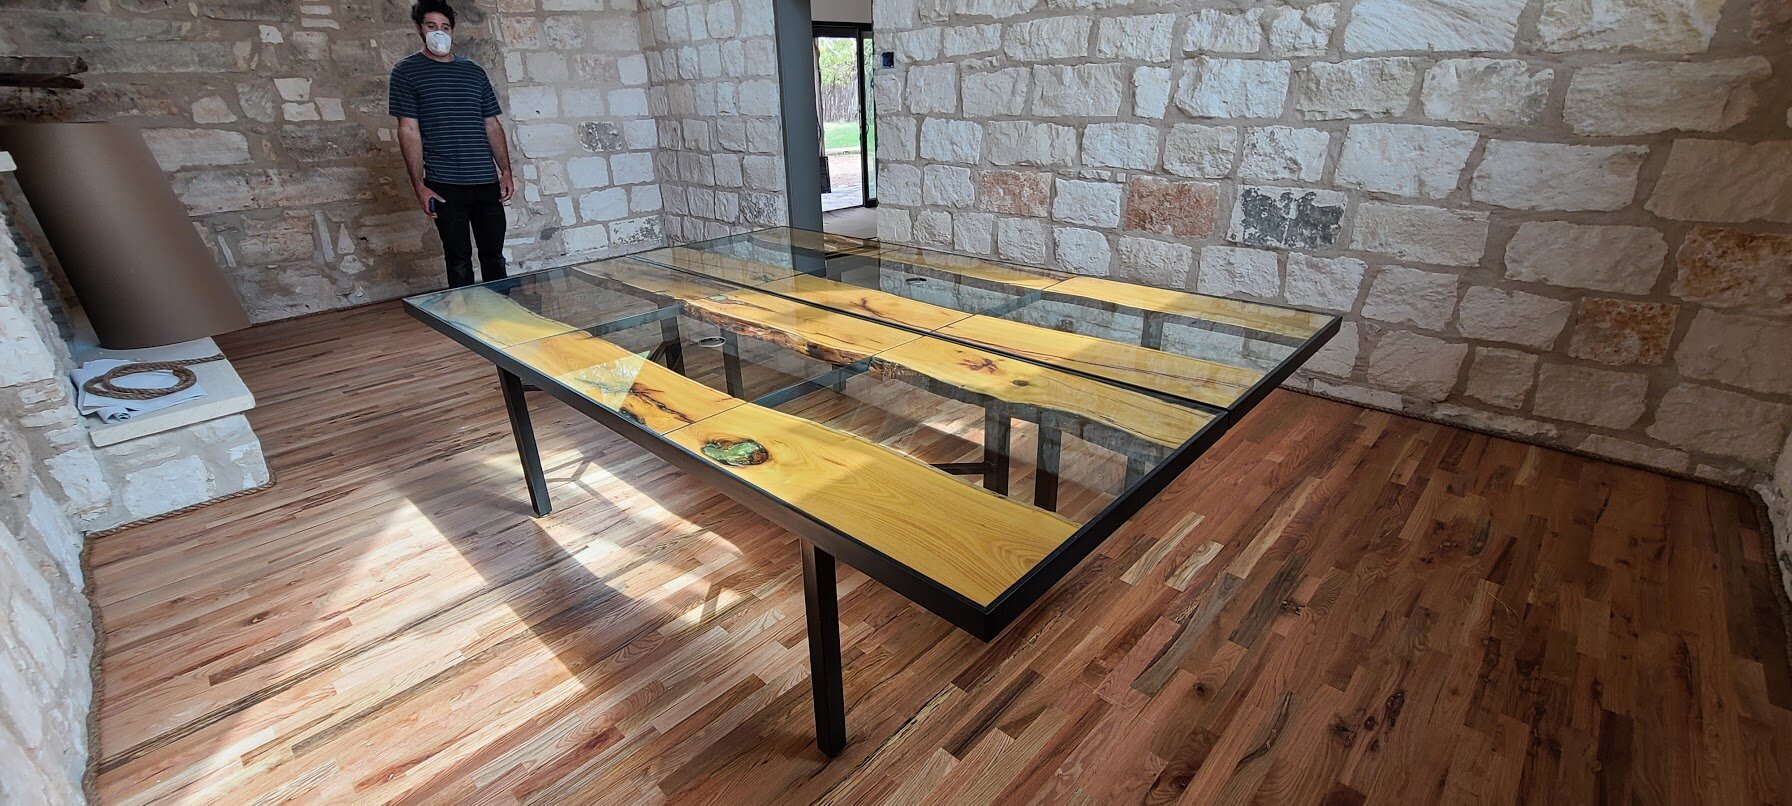 custom made furniture conference table set.JPG